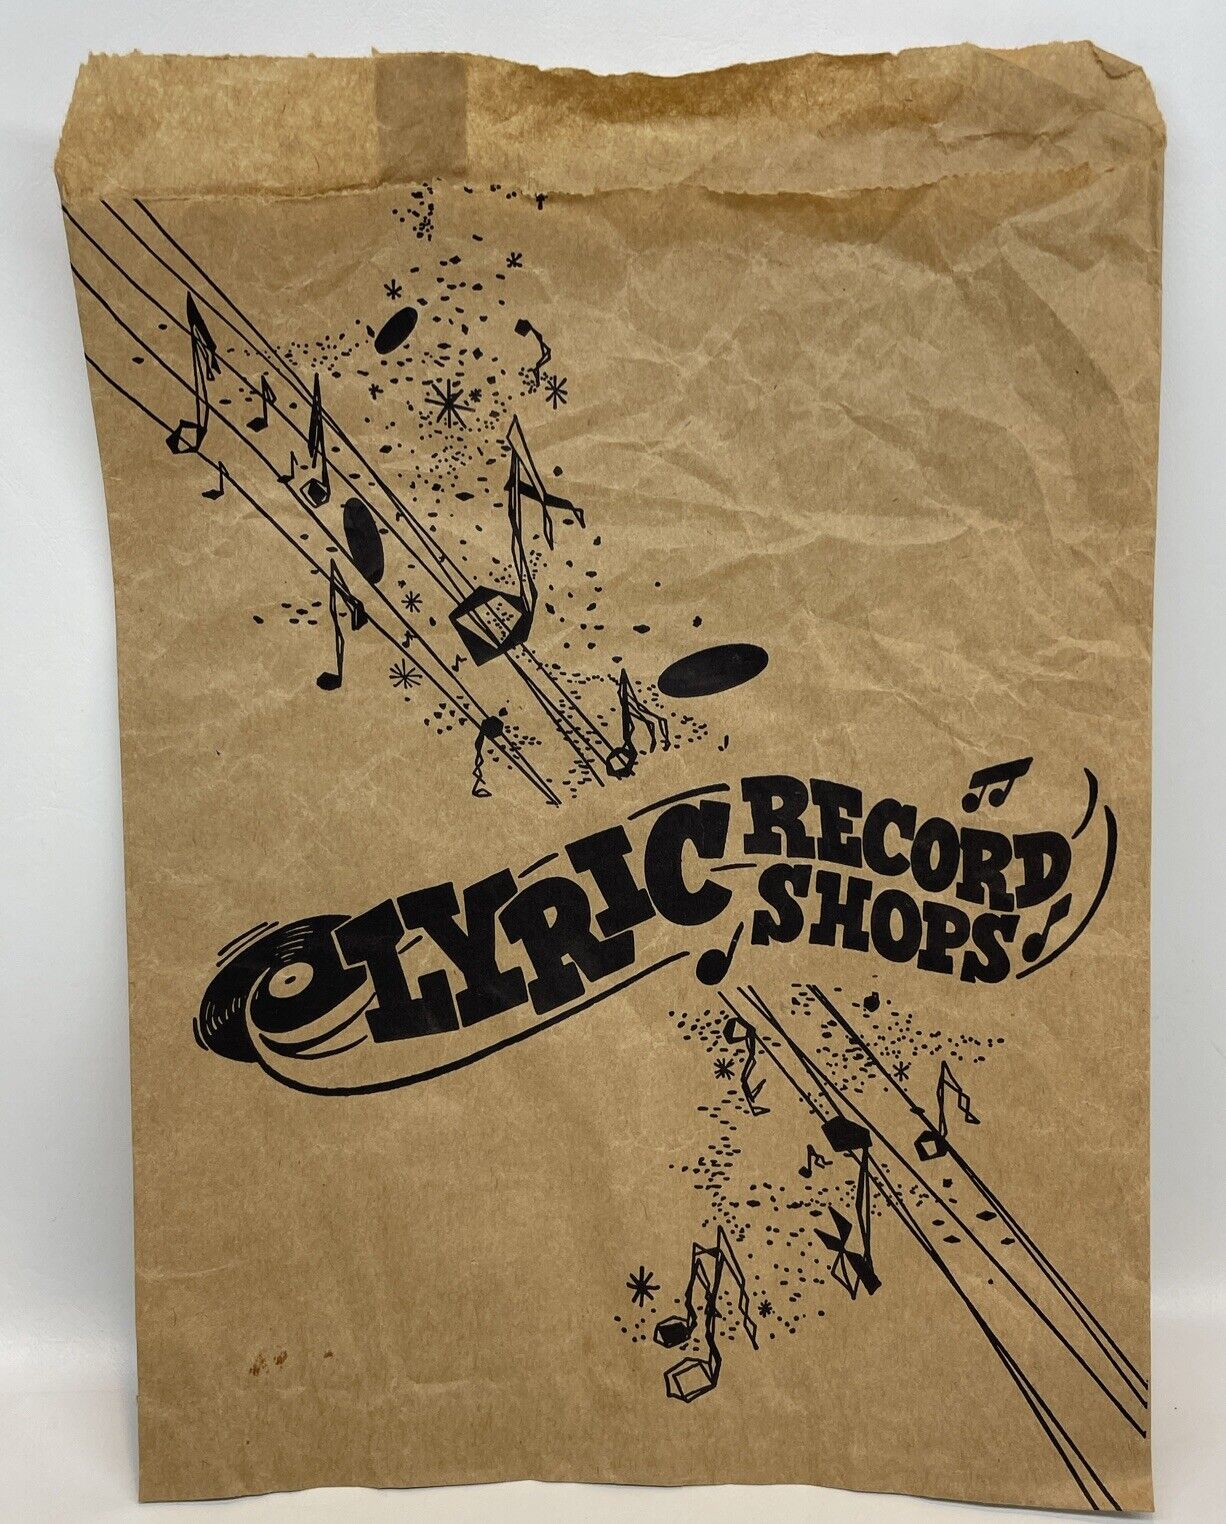 Vintage Lyric Record Shops Paper Shopping Bag Brown Sack 45 rpm size 8.5 x 11.5